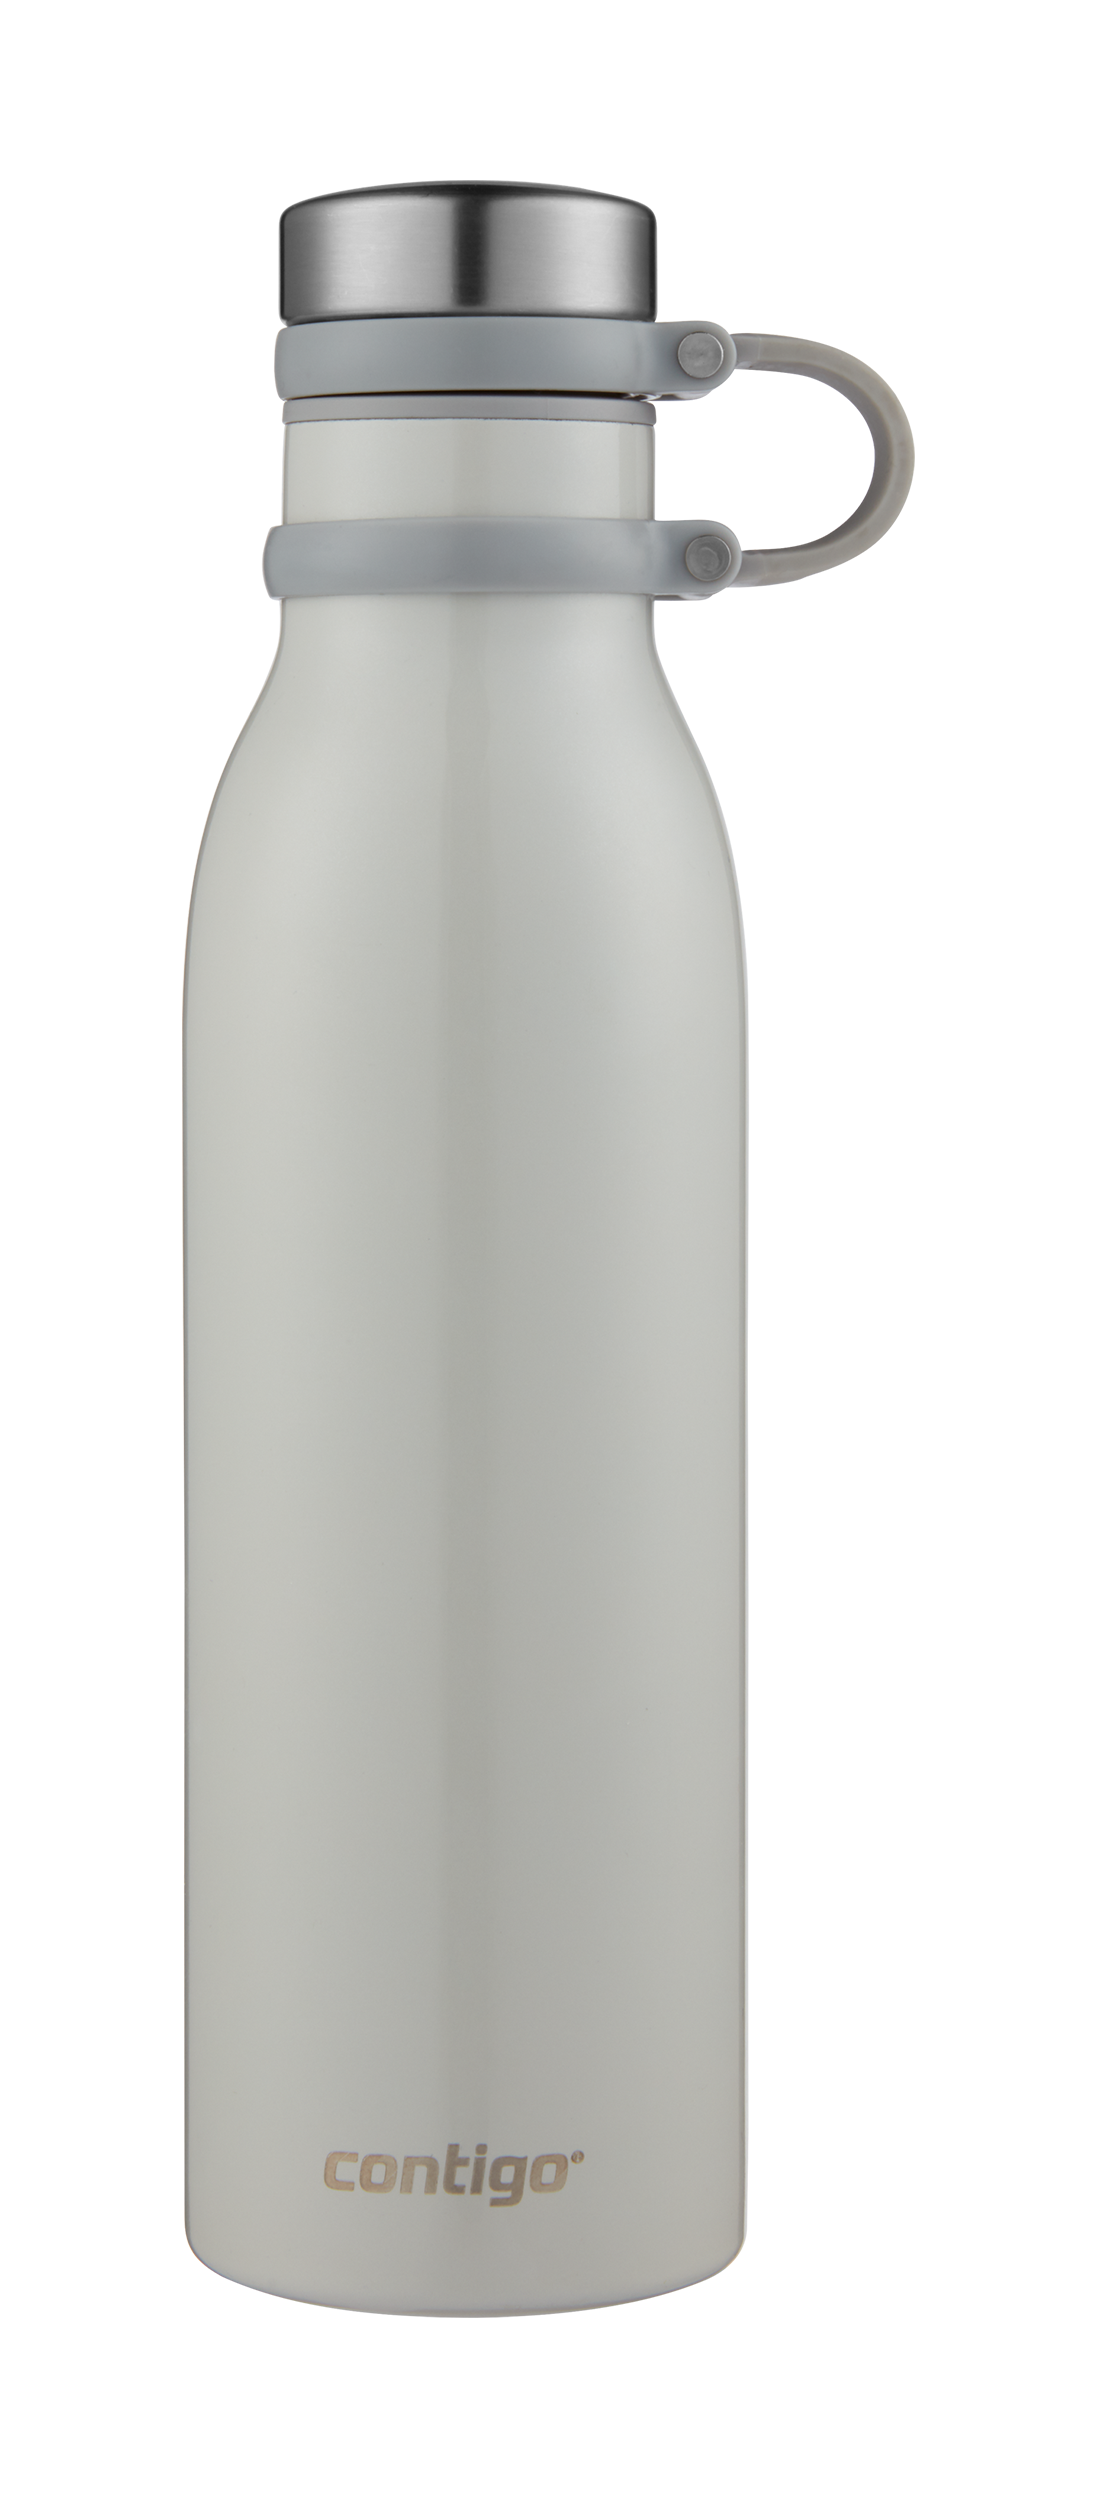 Contigo Autoseal Matterhorne Vacuum Insulated Stainless Steel Bottle 590 ml